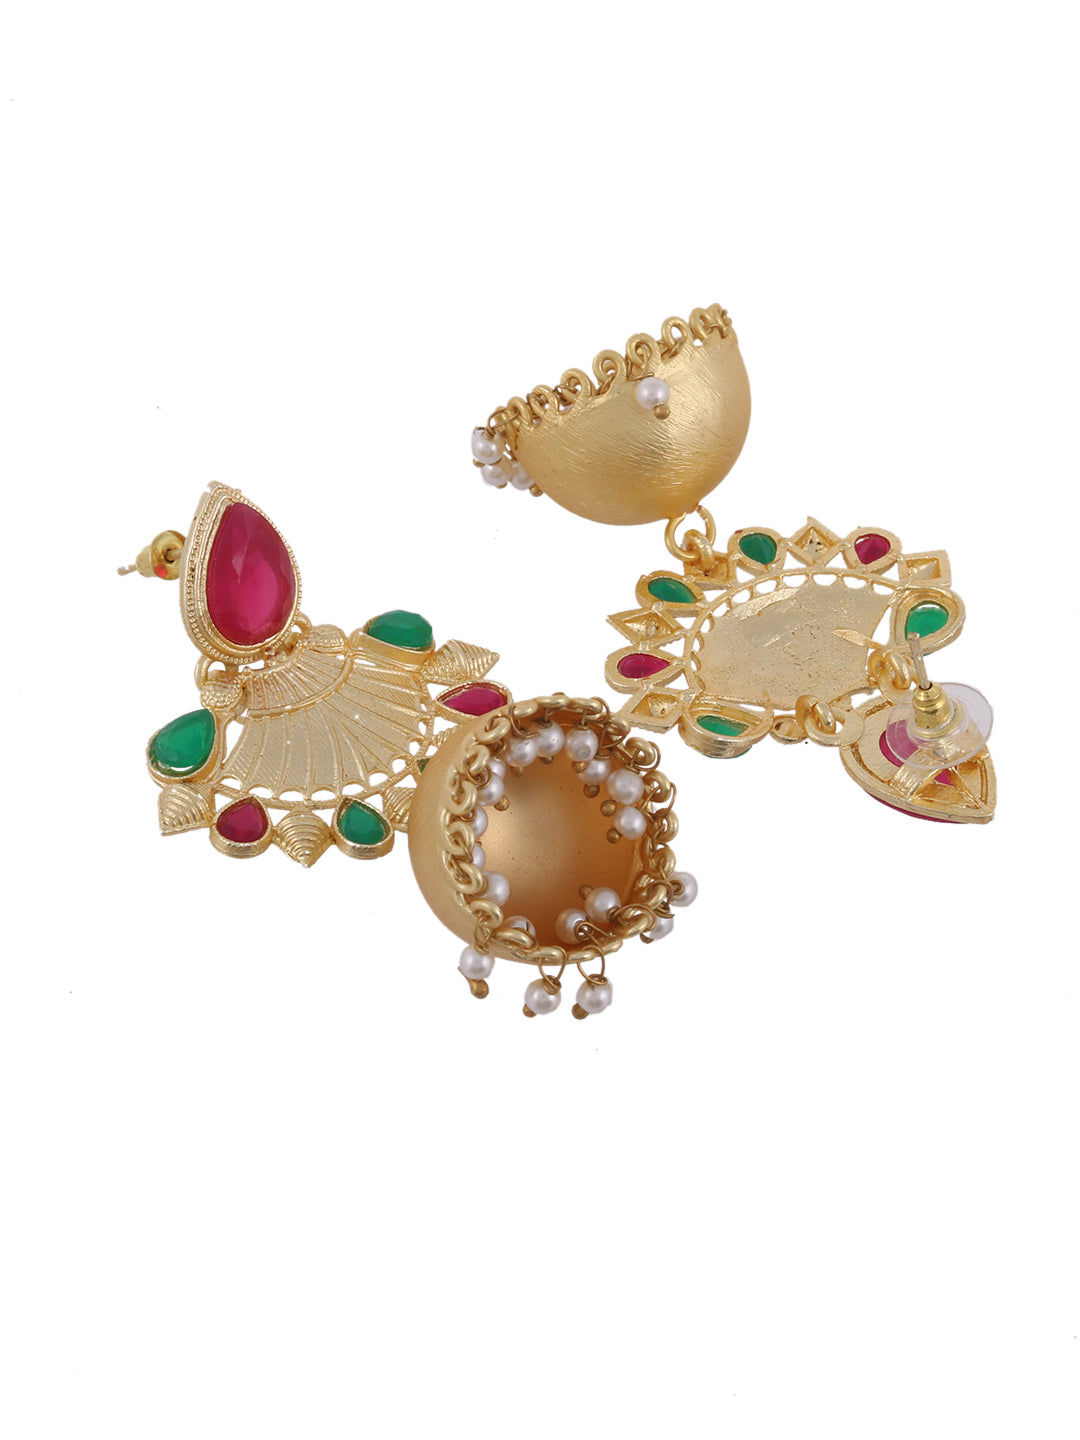 South Indian Chandbali Earrings